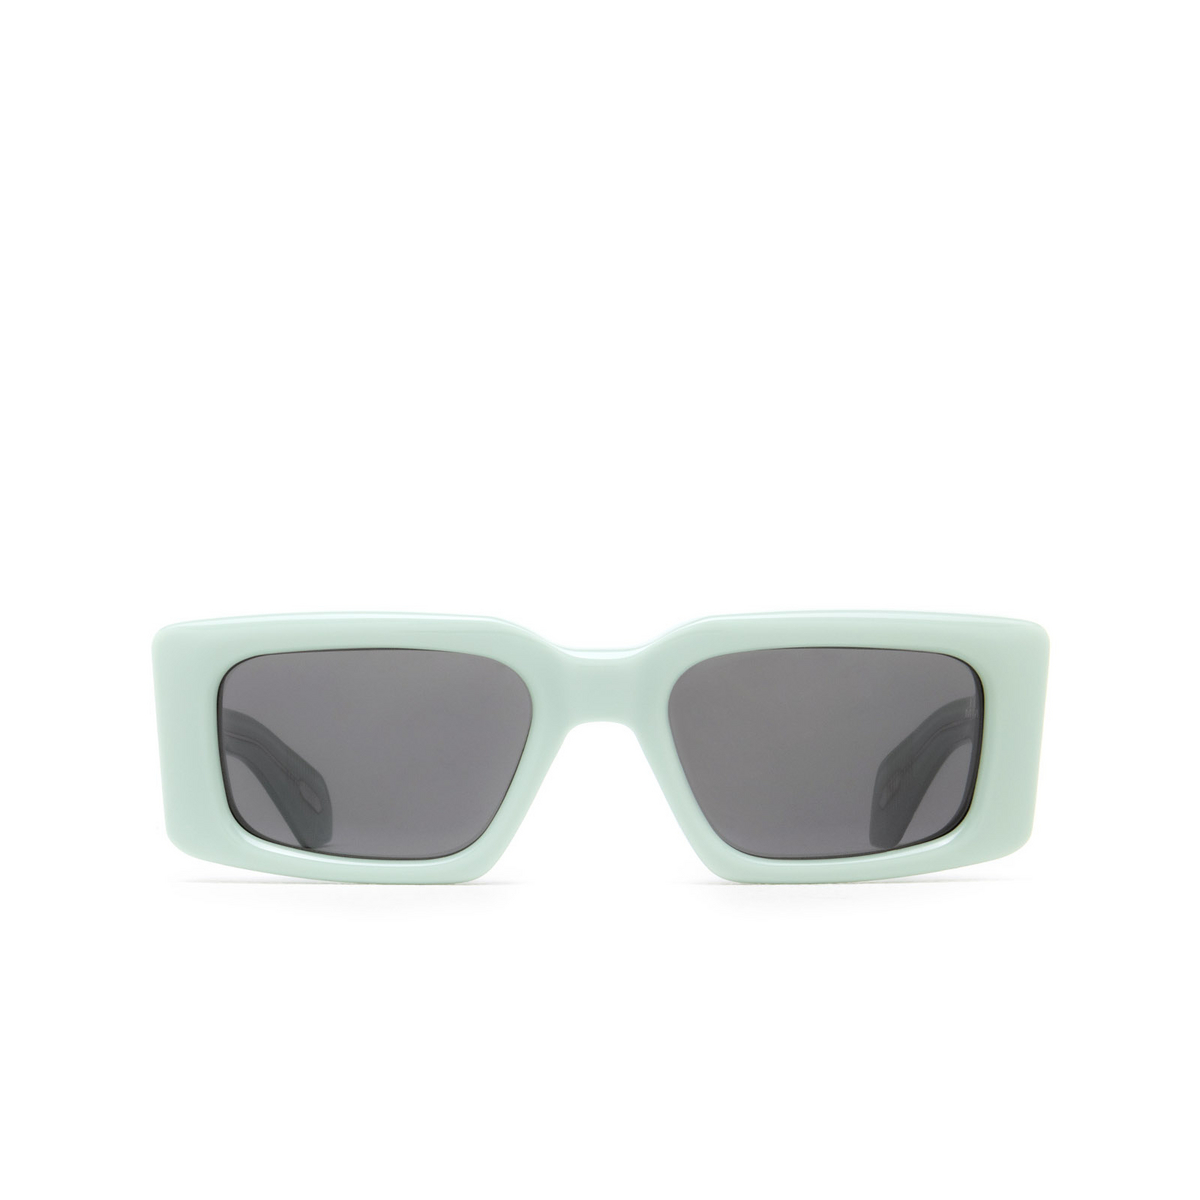 Jacques Marie Mage SUPERSONIC Sunglasses GLACIER - front view